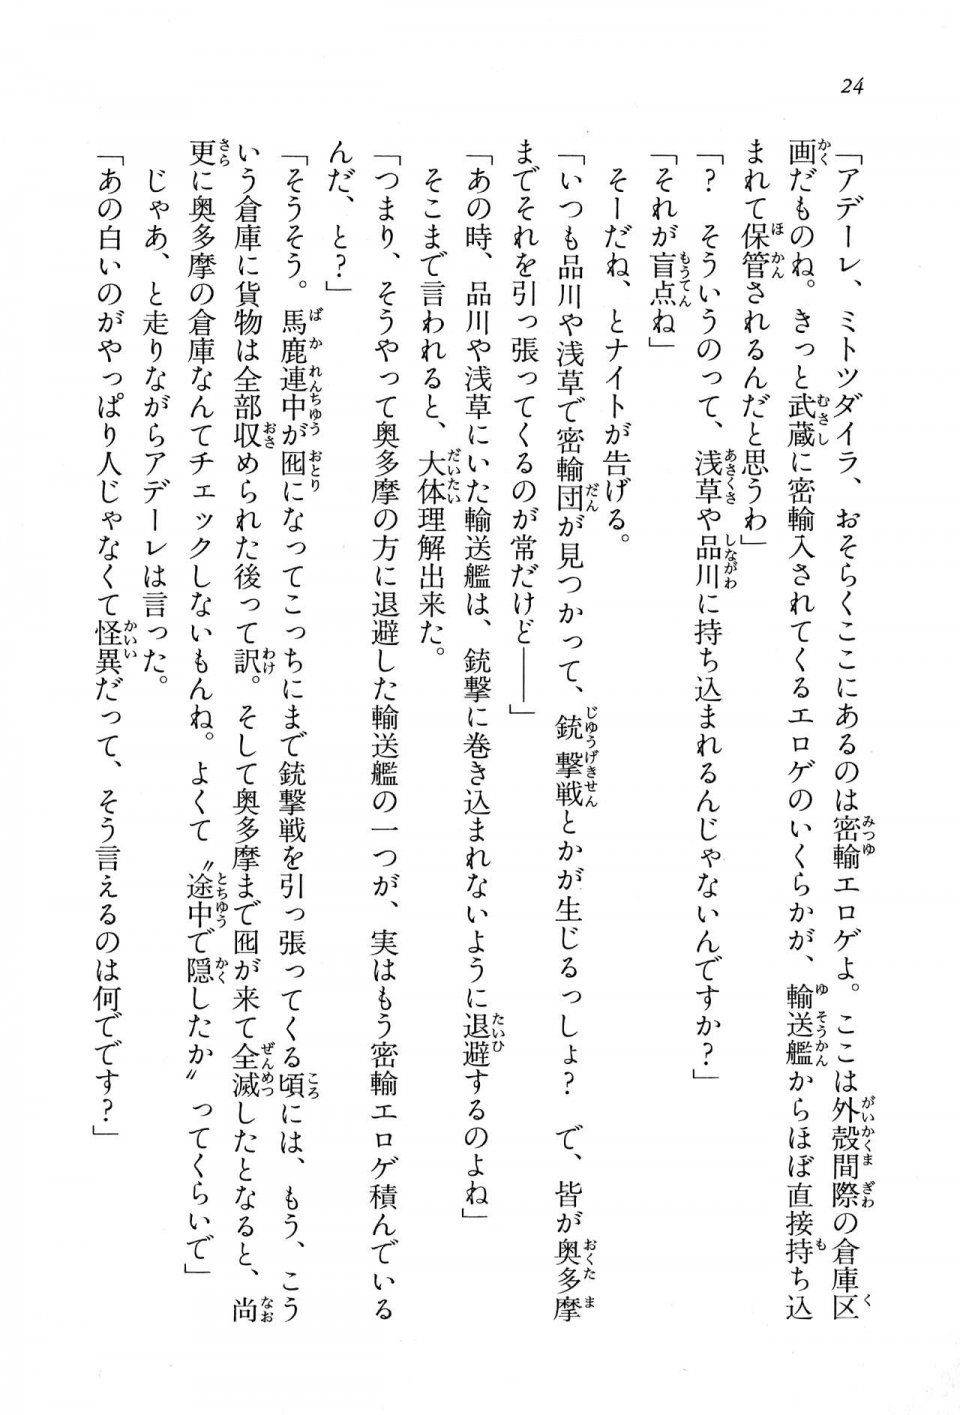 Kyoukai Senjou no Horizon BD Special Mininovel Vol 6(3B) - Photo #28